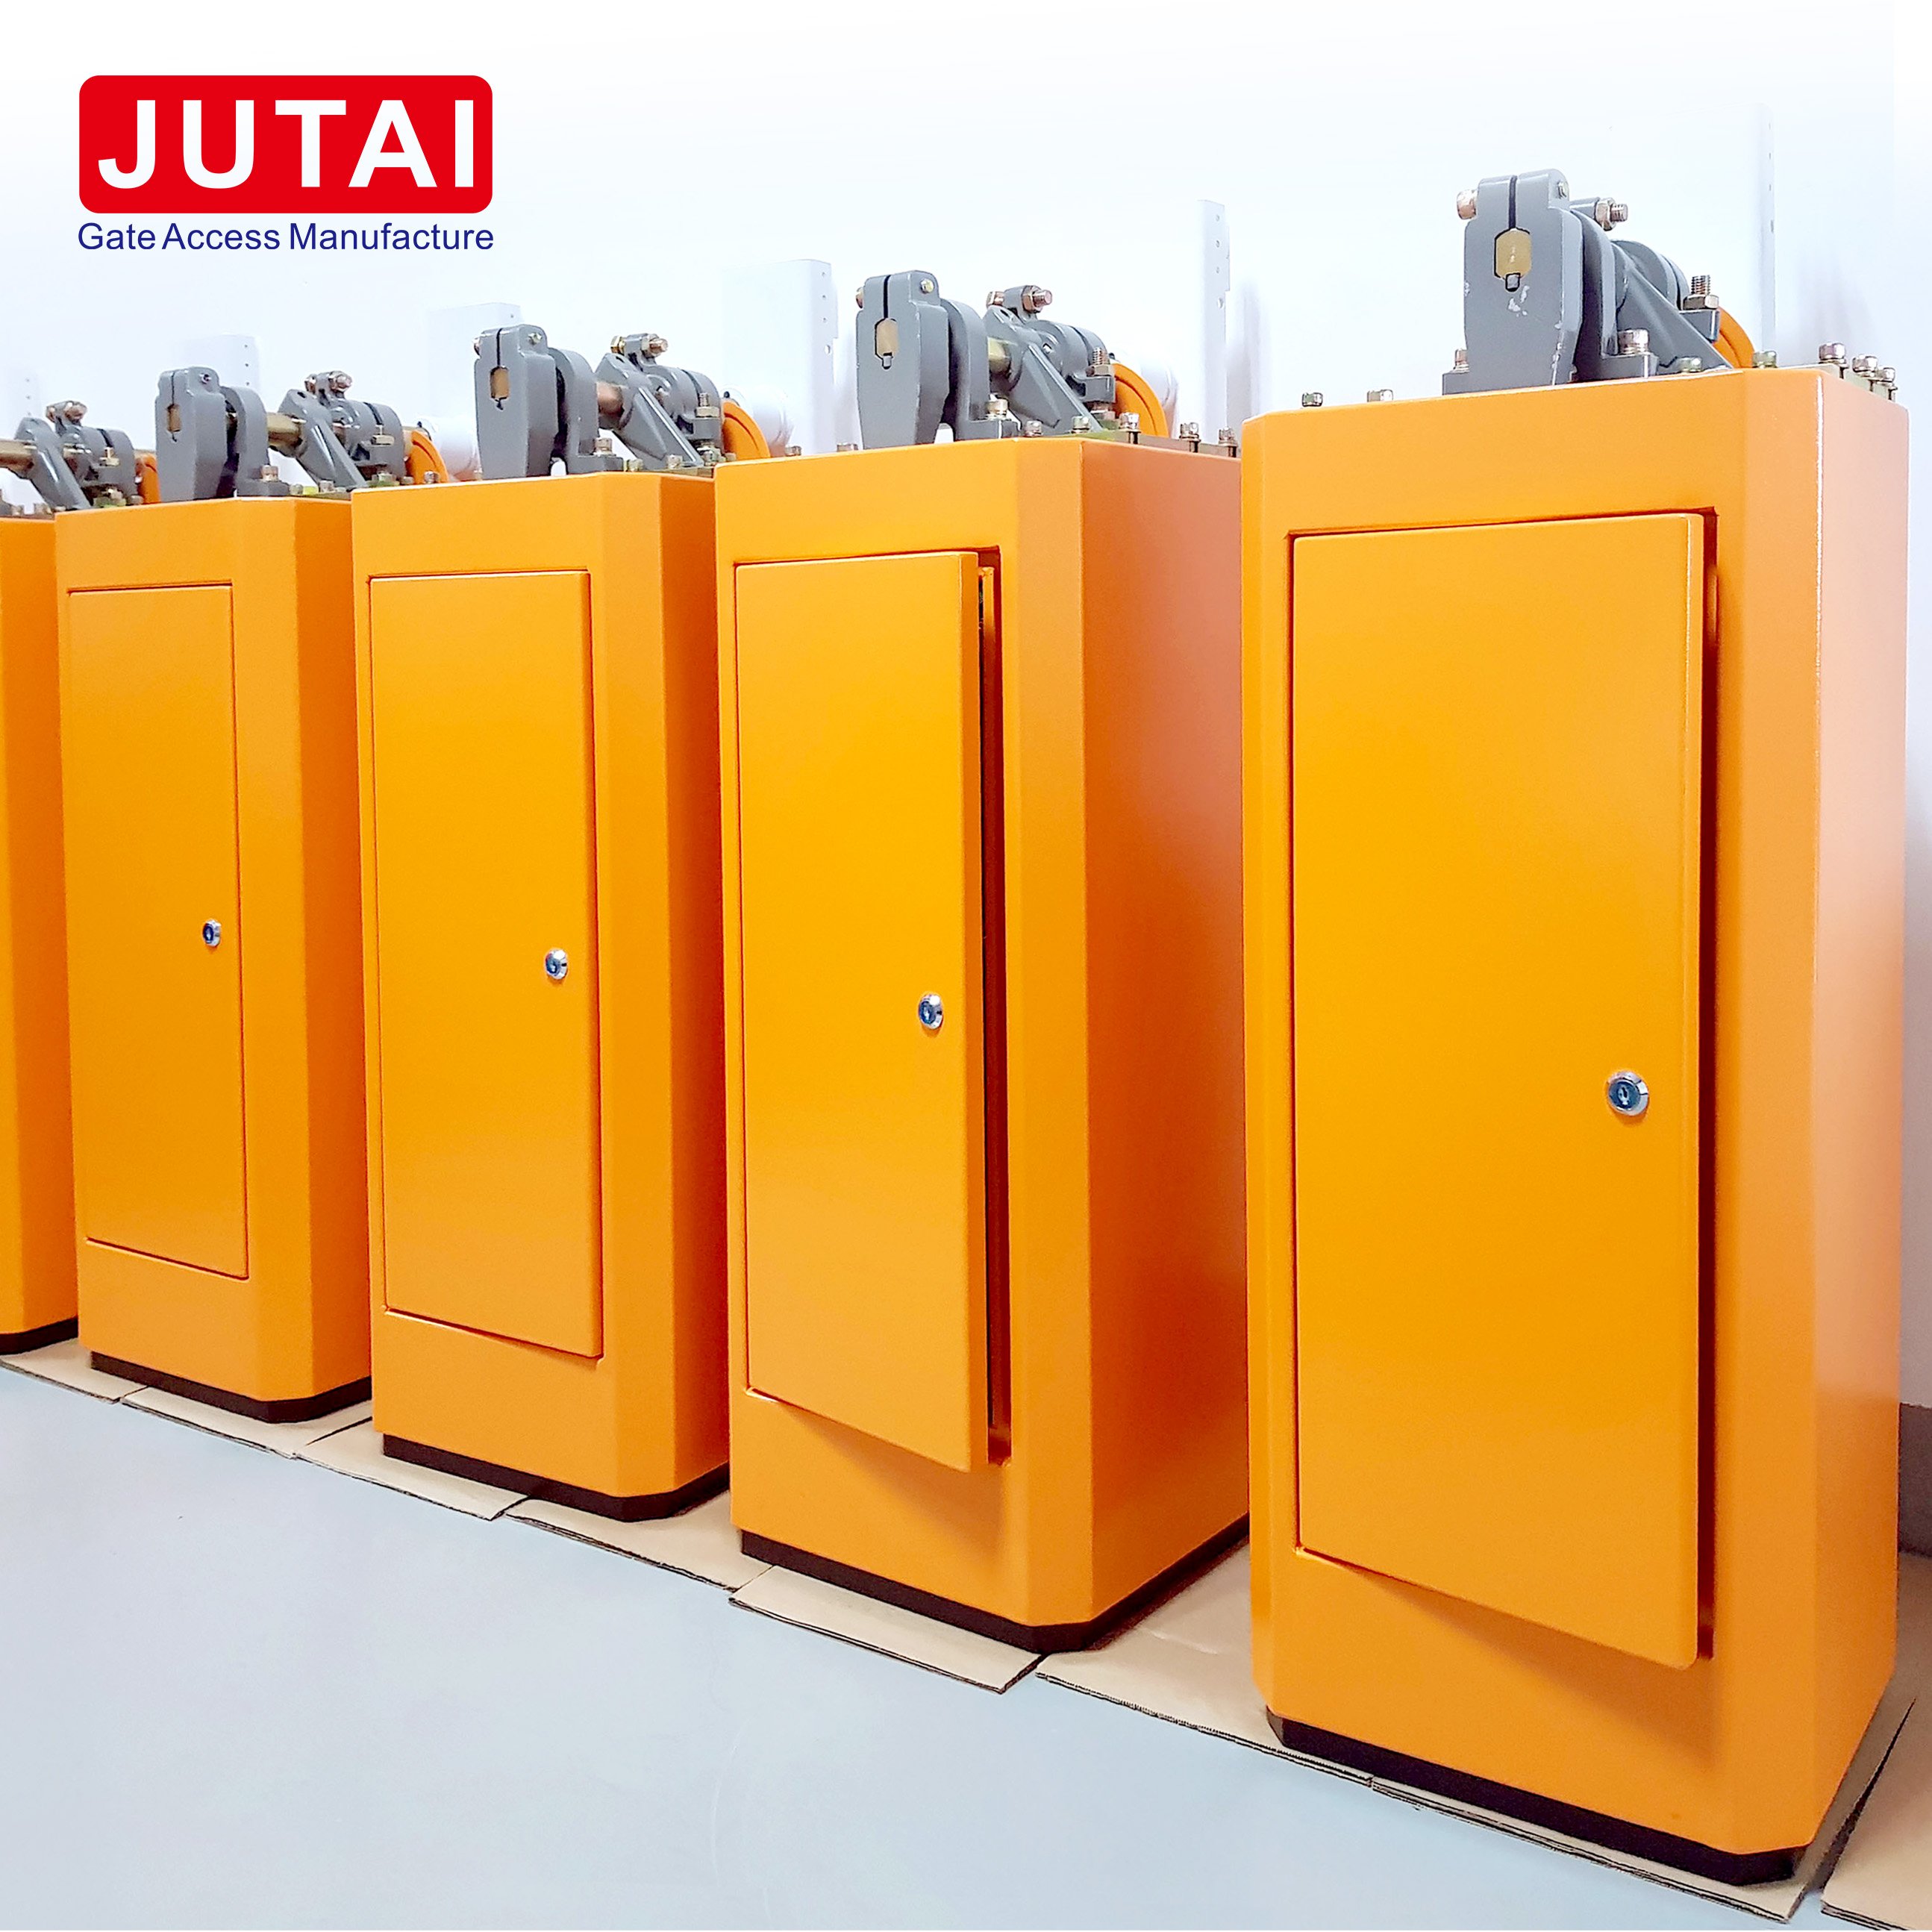 Operador de puerta de barrera automática JUTAI que trabaja con tres botones pulsadores JUTAI para abrir / detener / cerrar